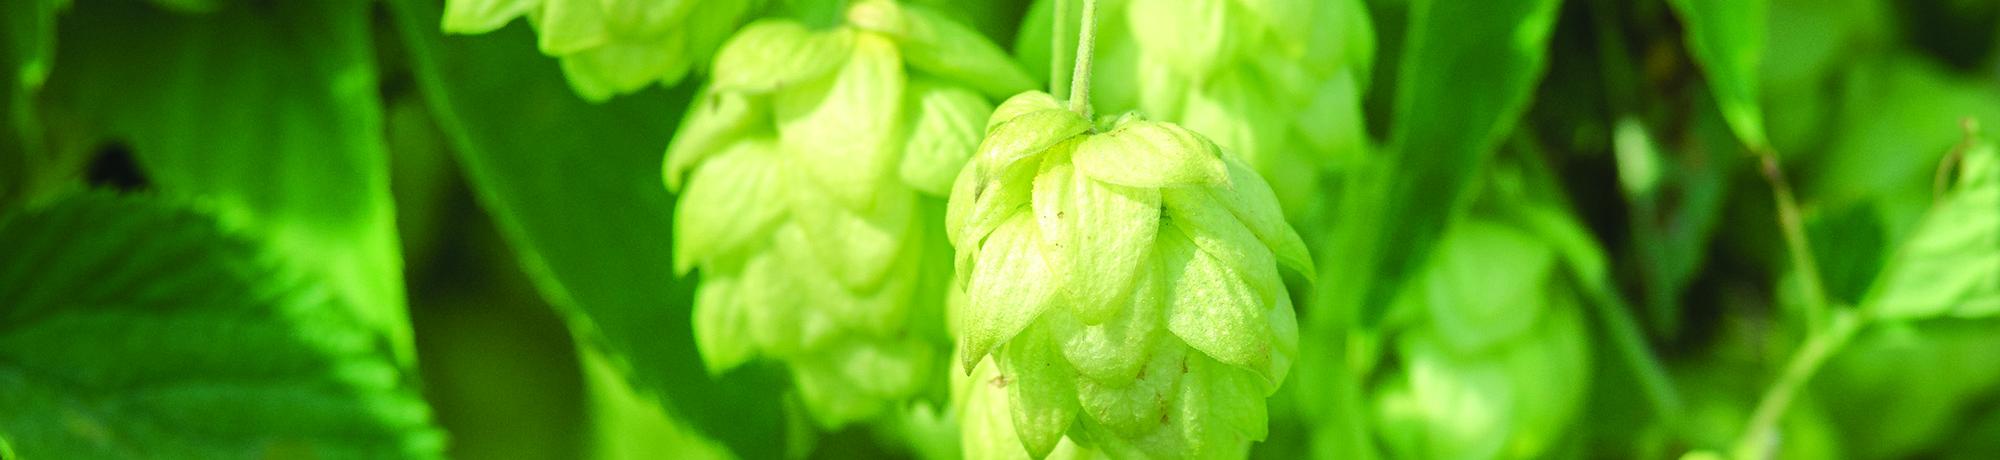 close up of hops